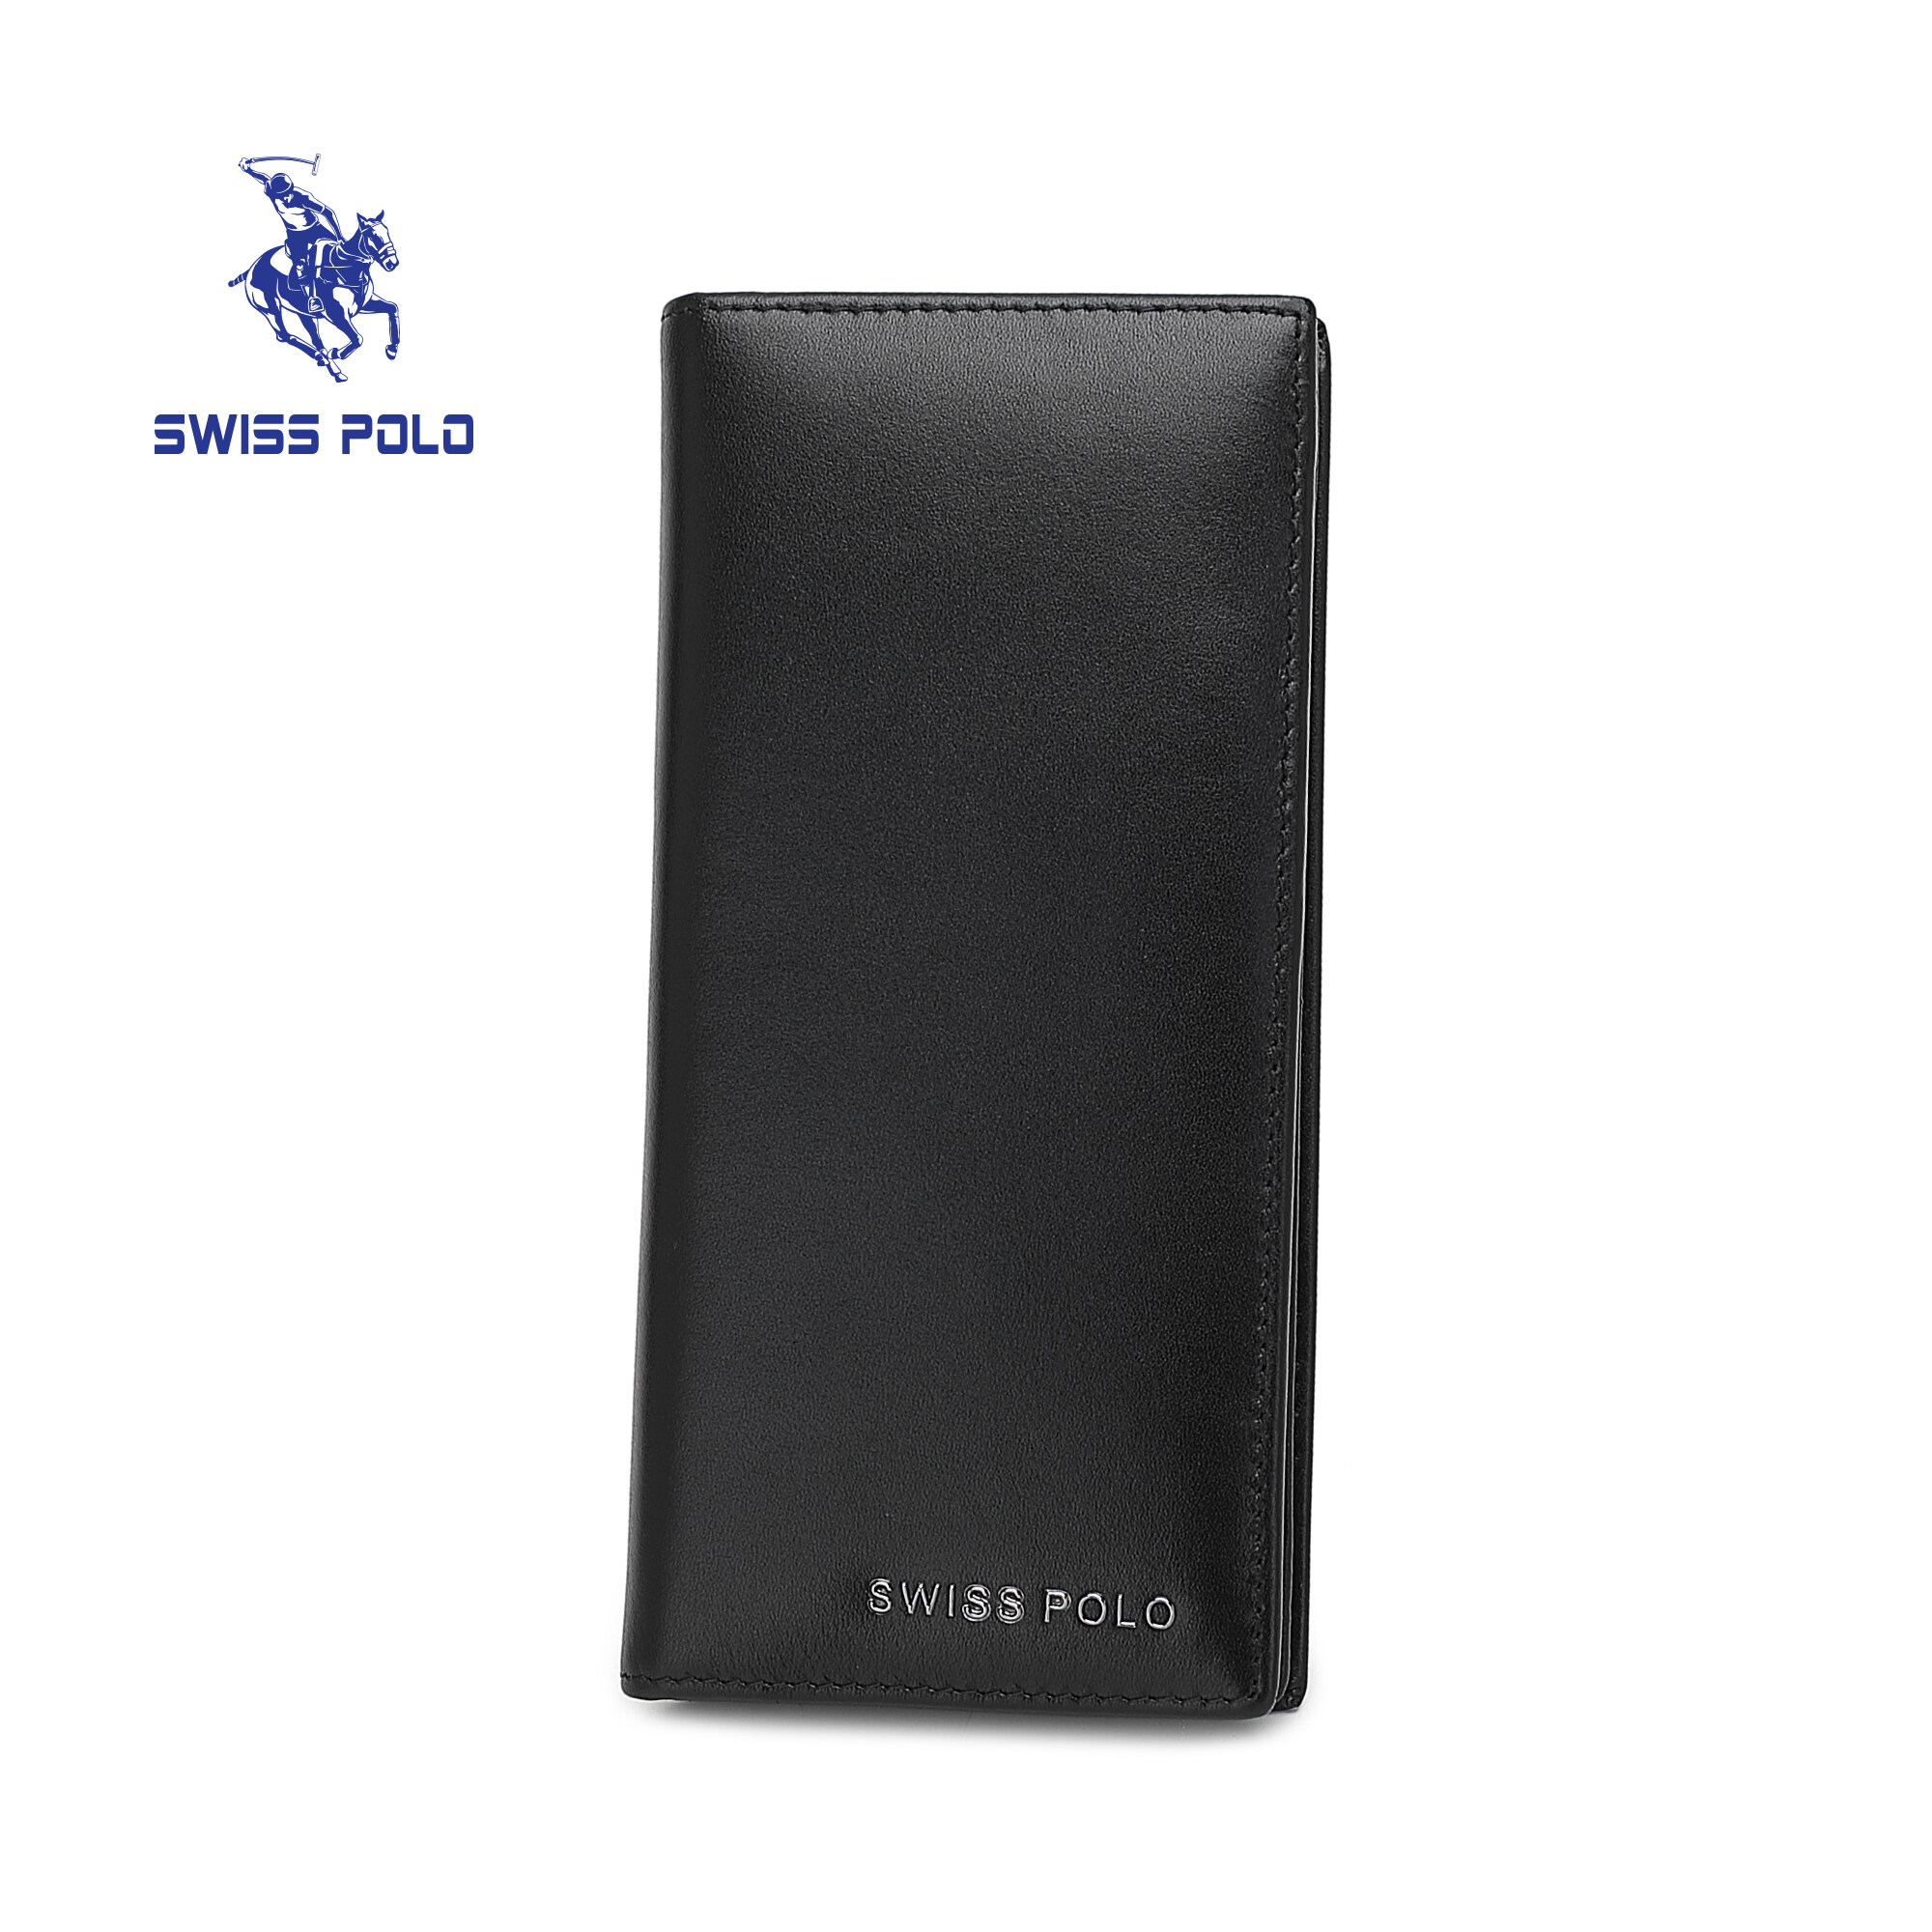 SWISS POLO Genuine Leather Long Wallet SW 197-1 BLACK